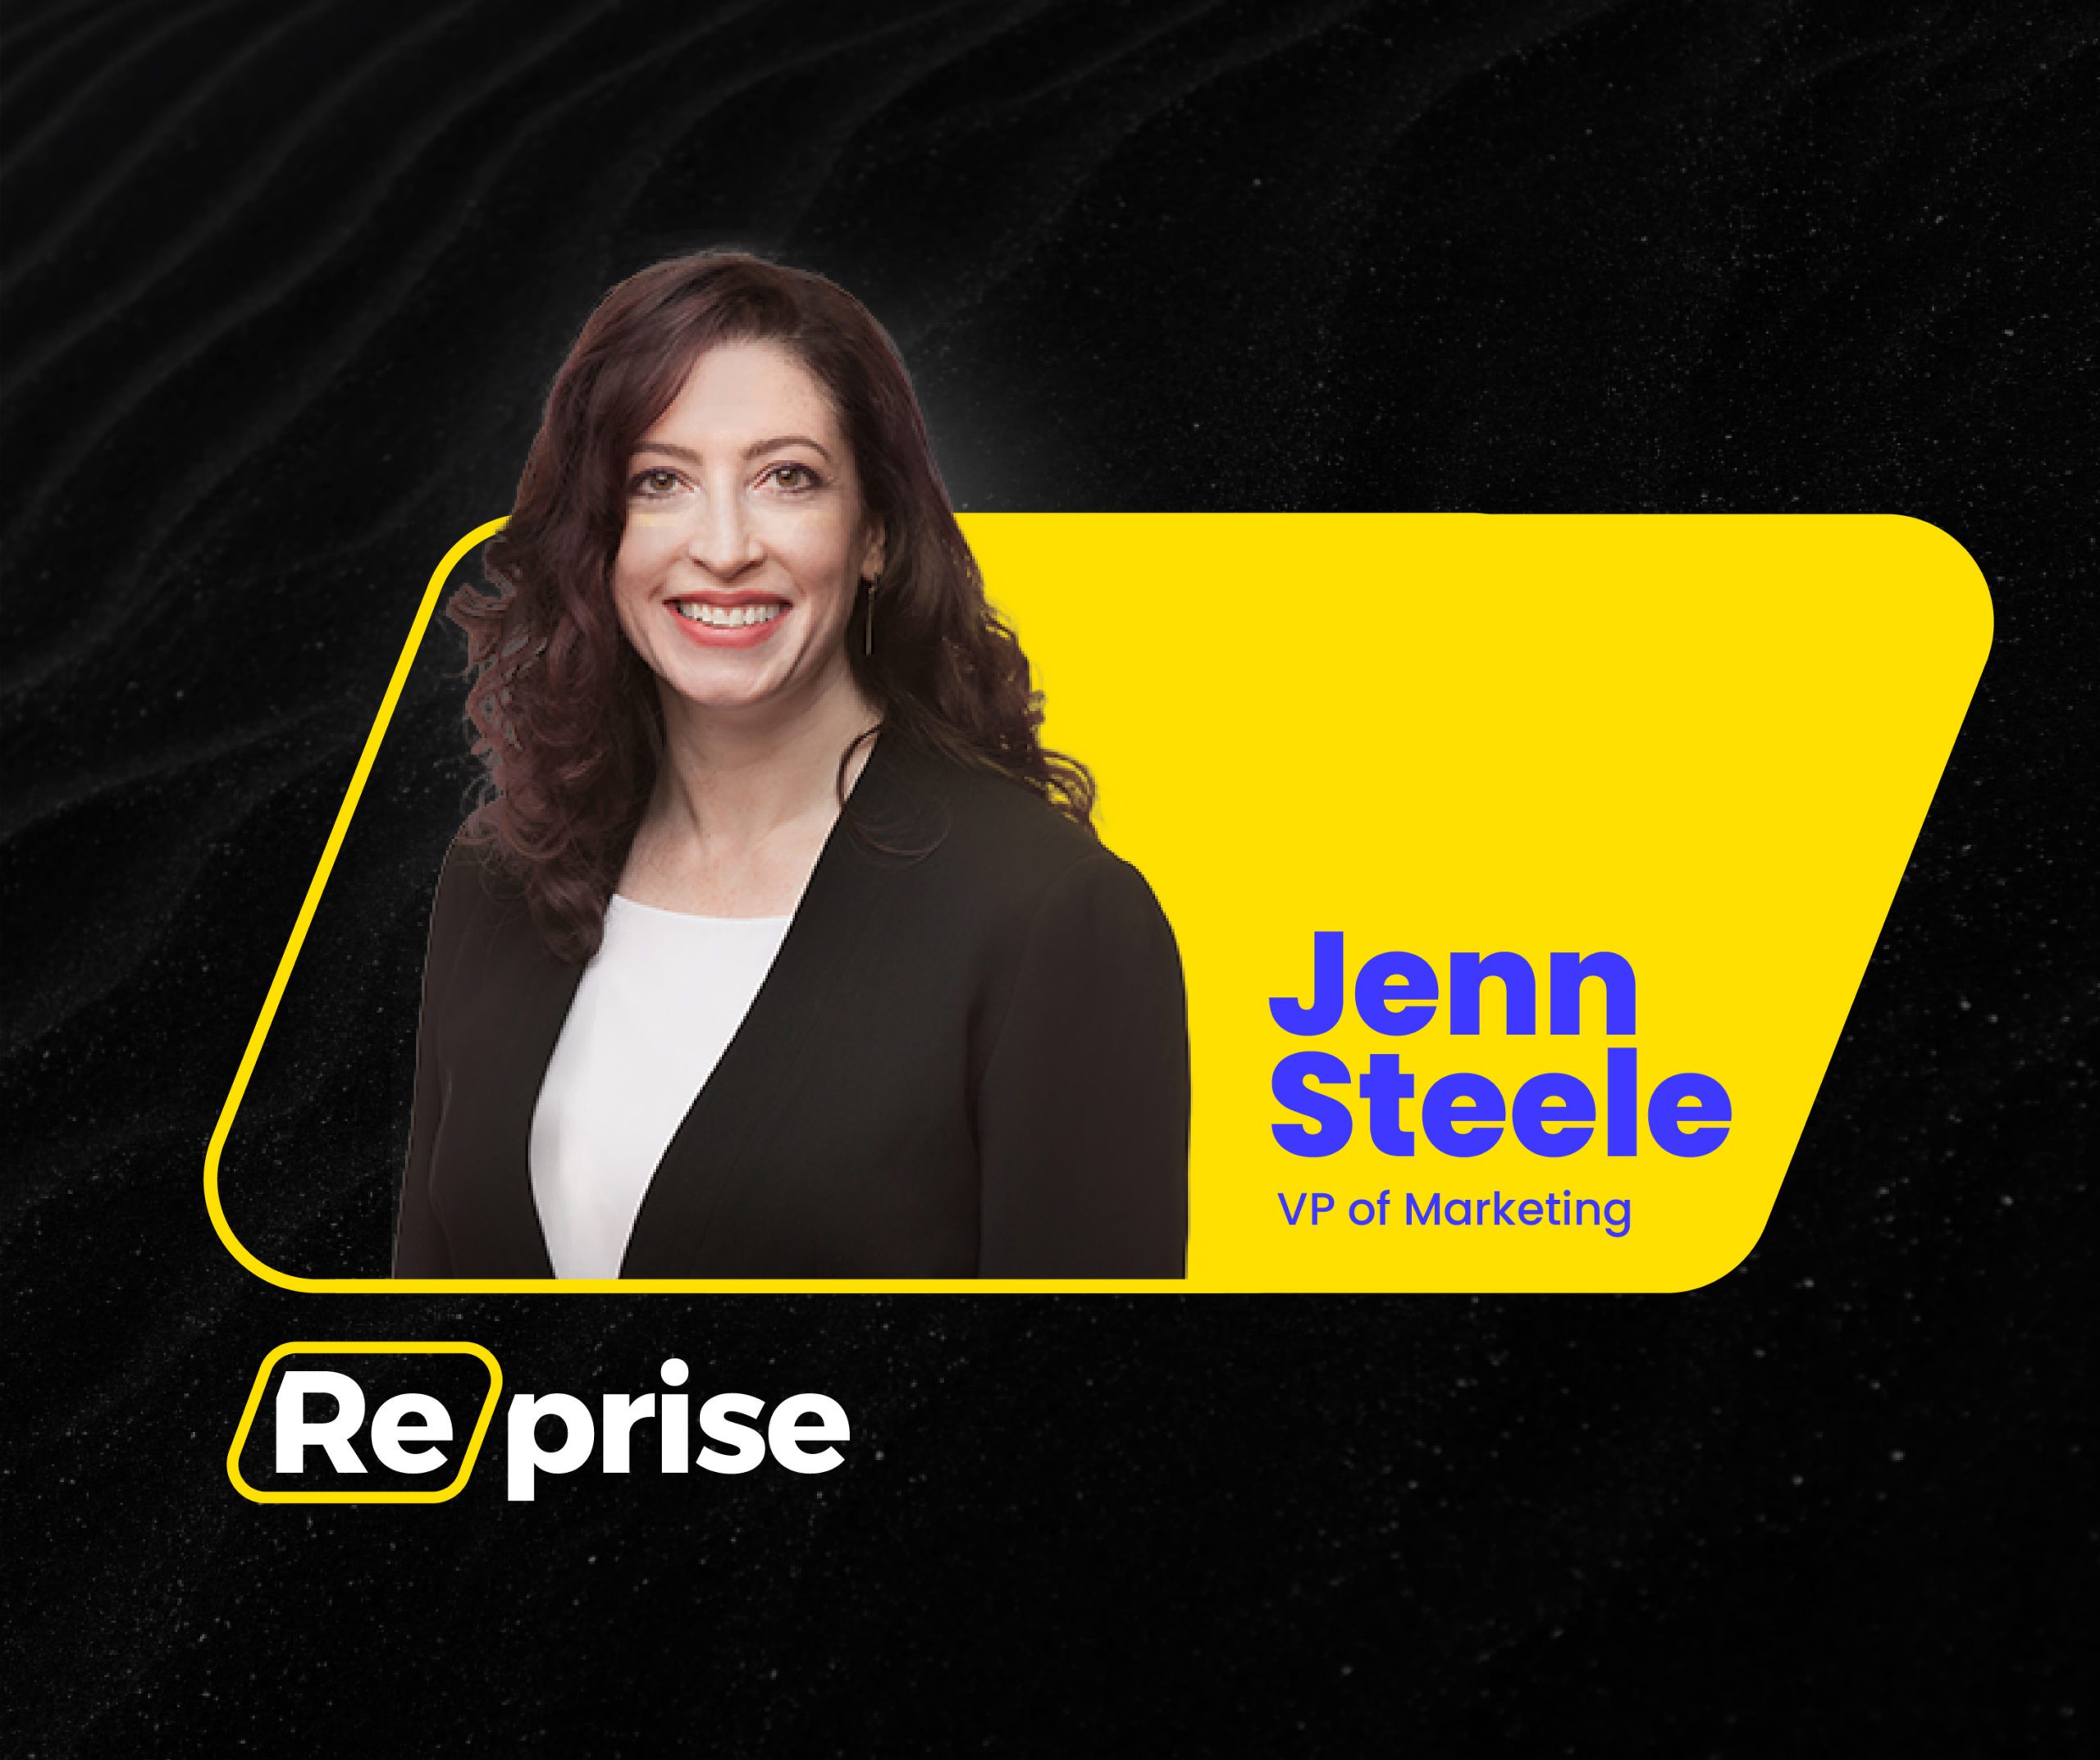 Reprise Welcomes Jenn Steele  as VP of Marketing